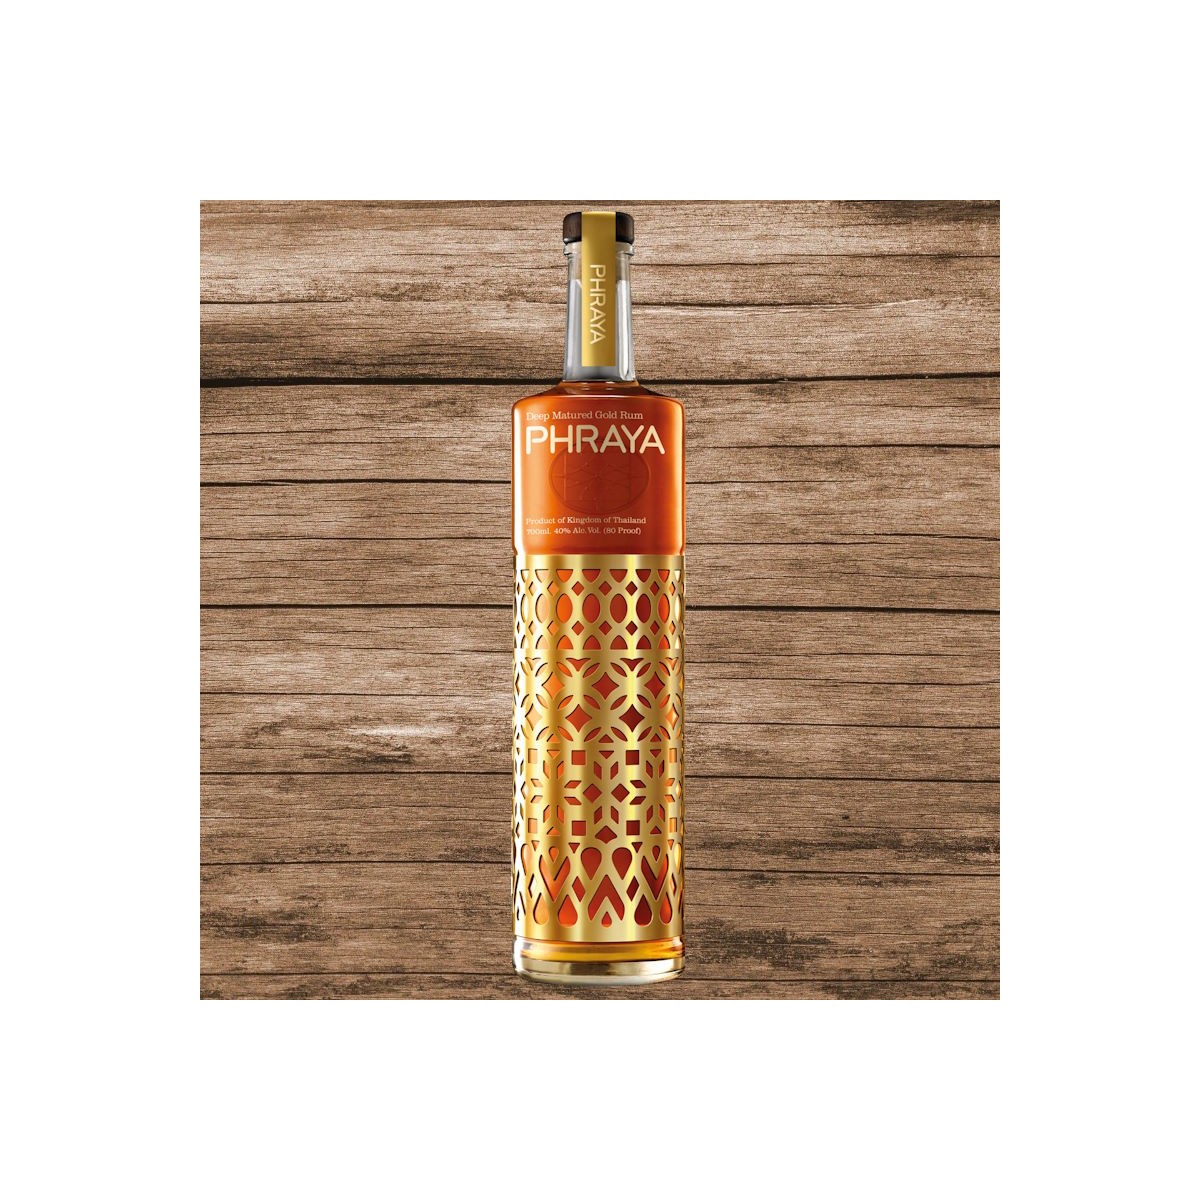 Phraya Deep Matured Gold Rum 40% 0,7L